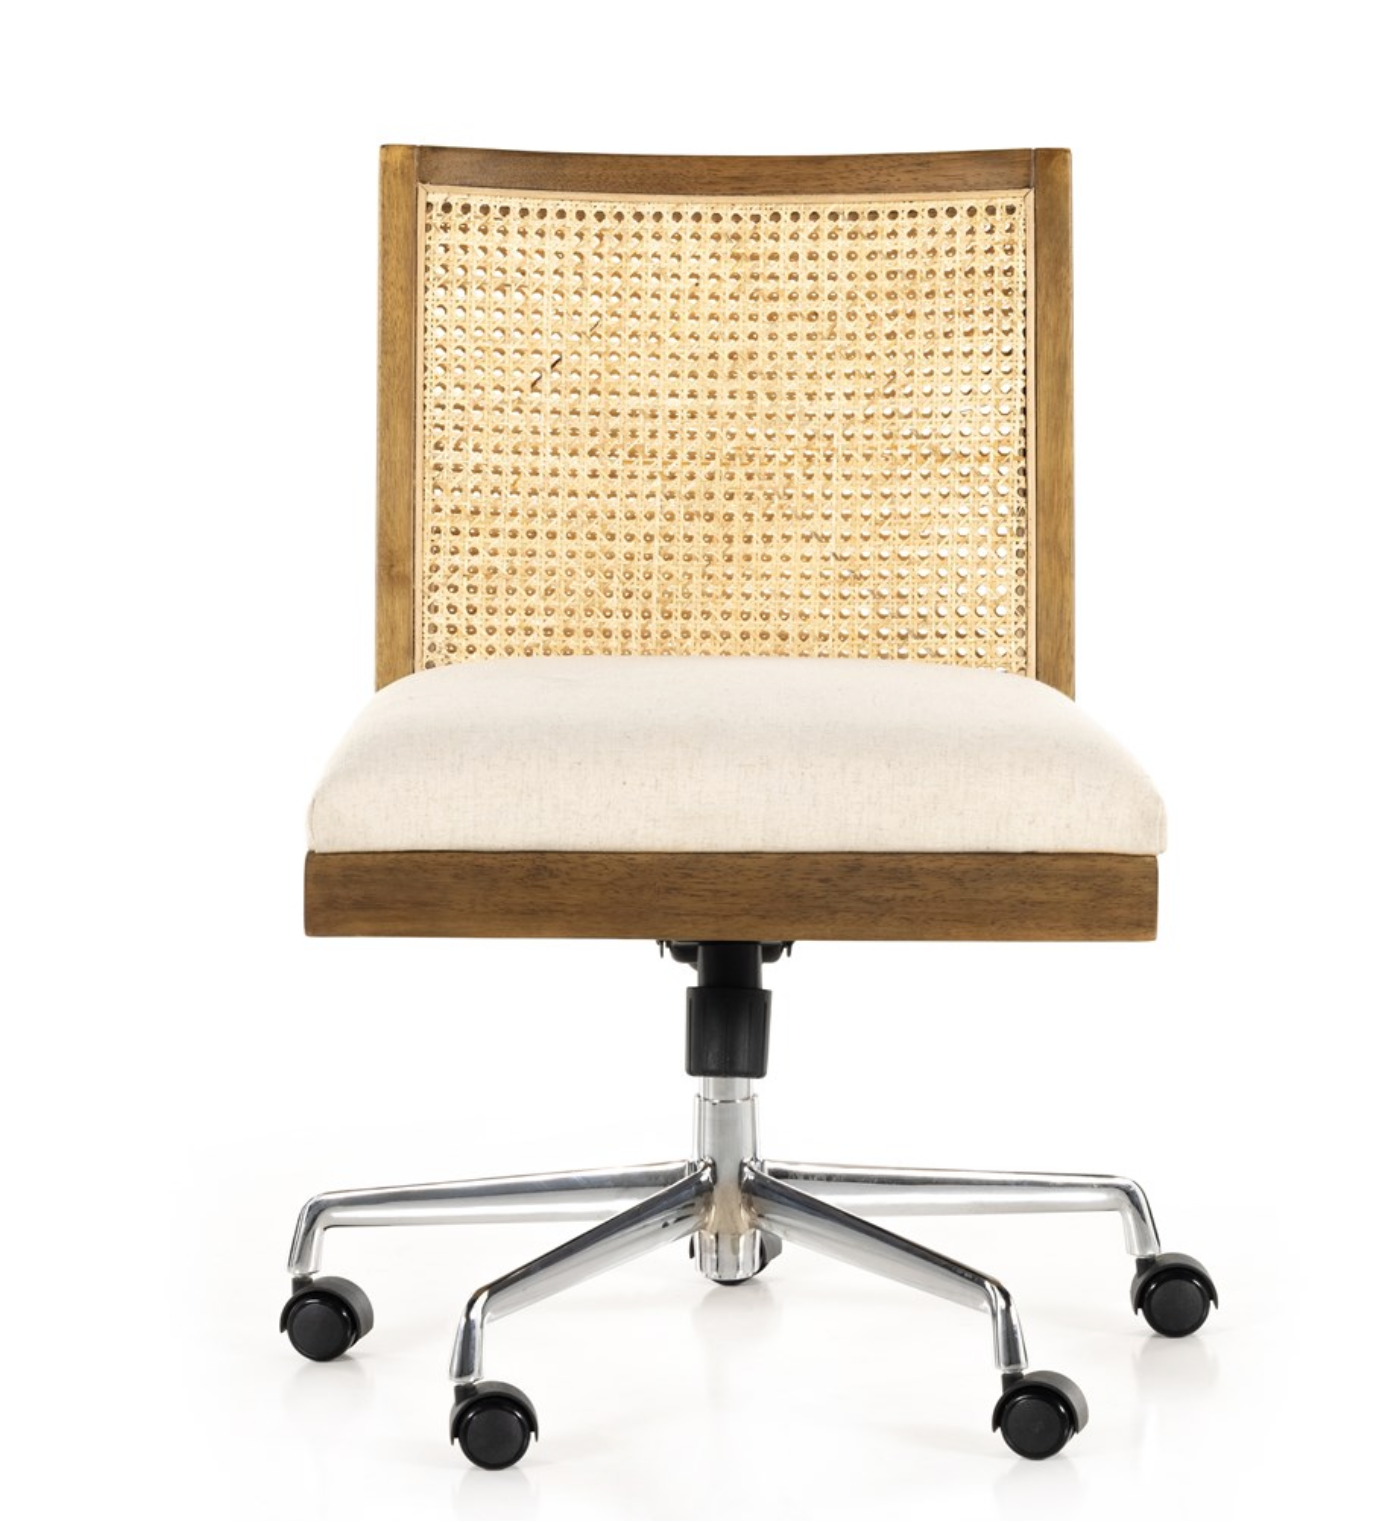 Antonia Cane Armless Desk Chair